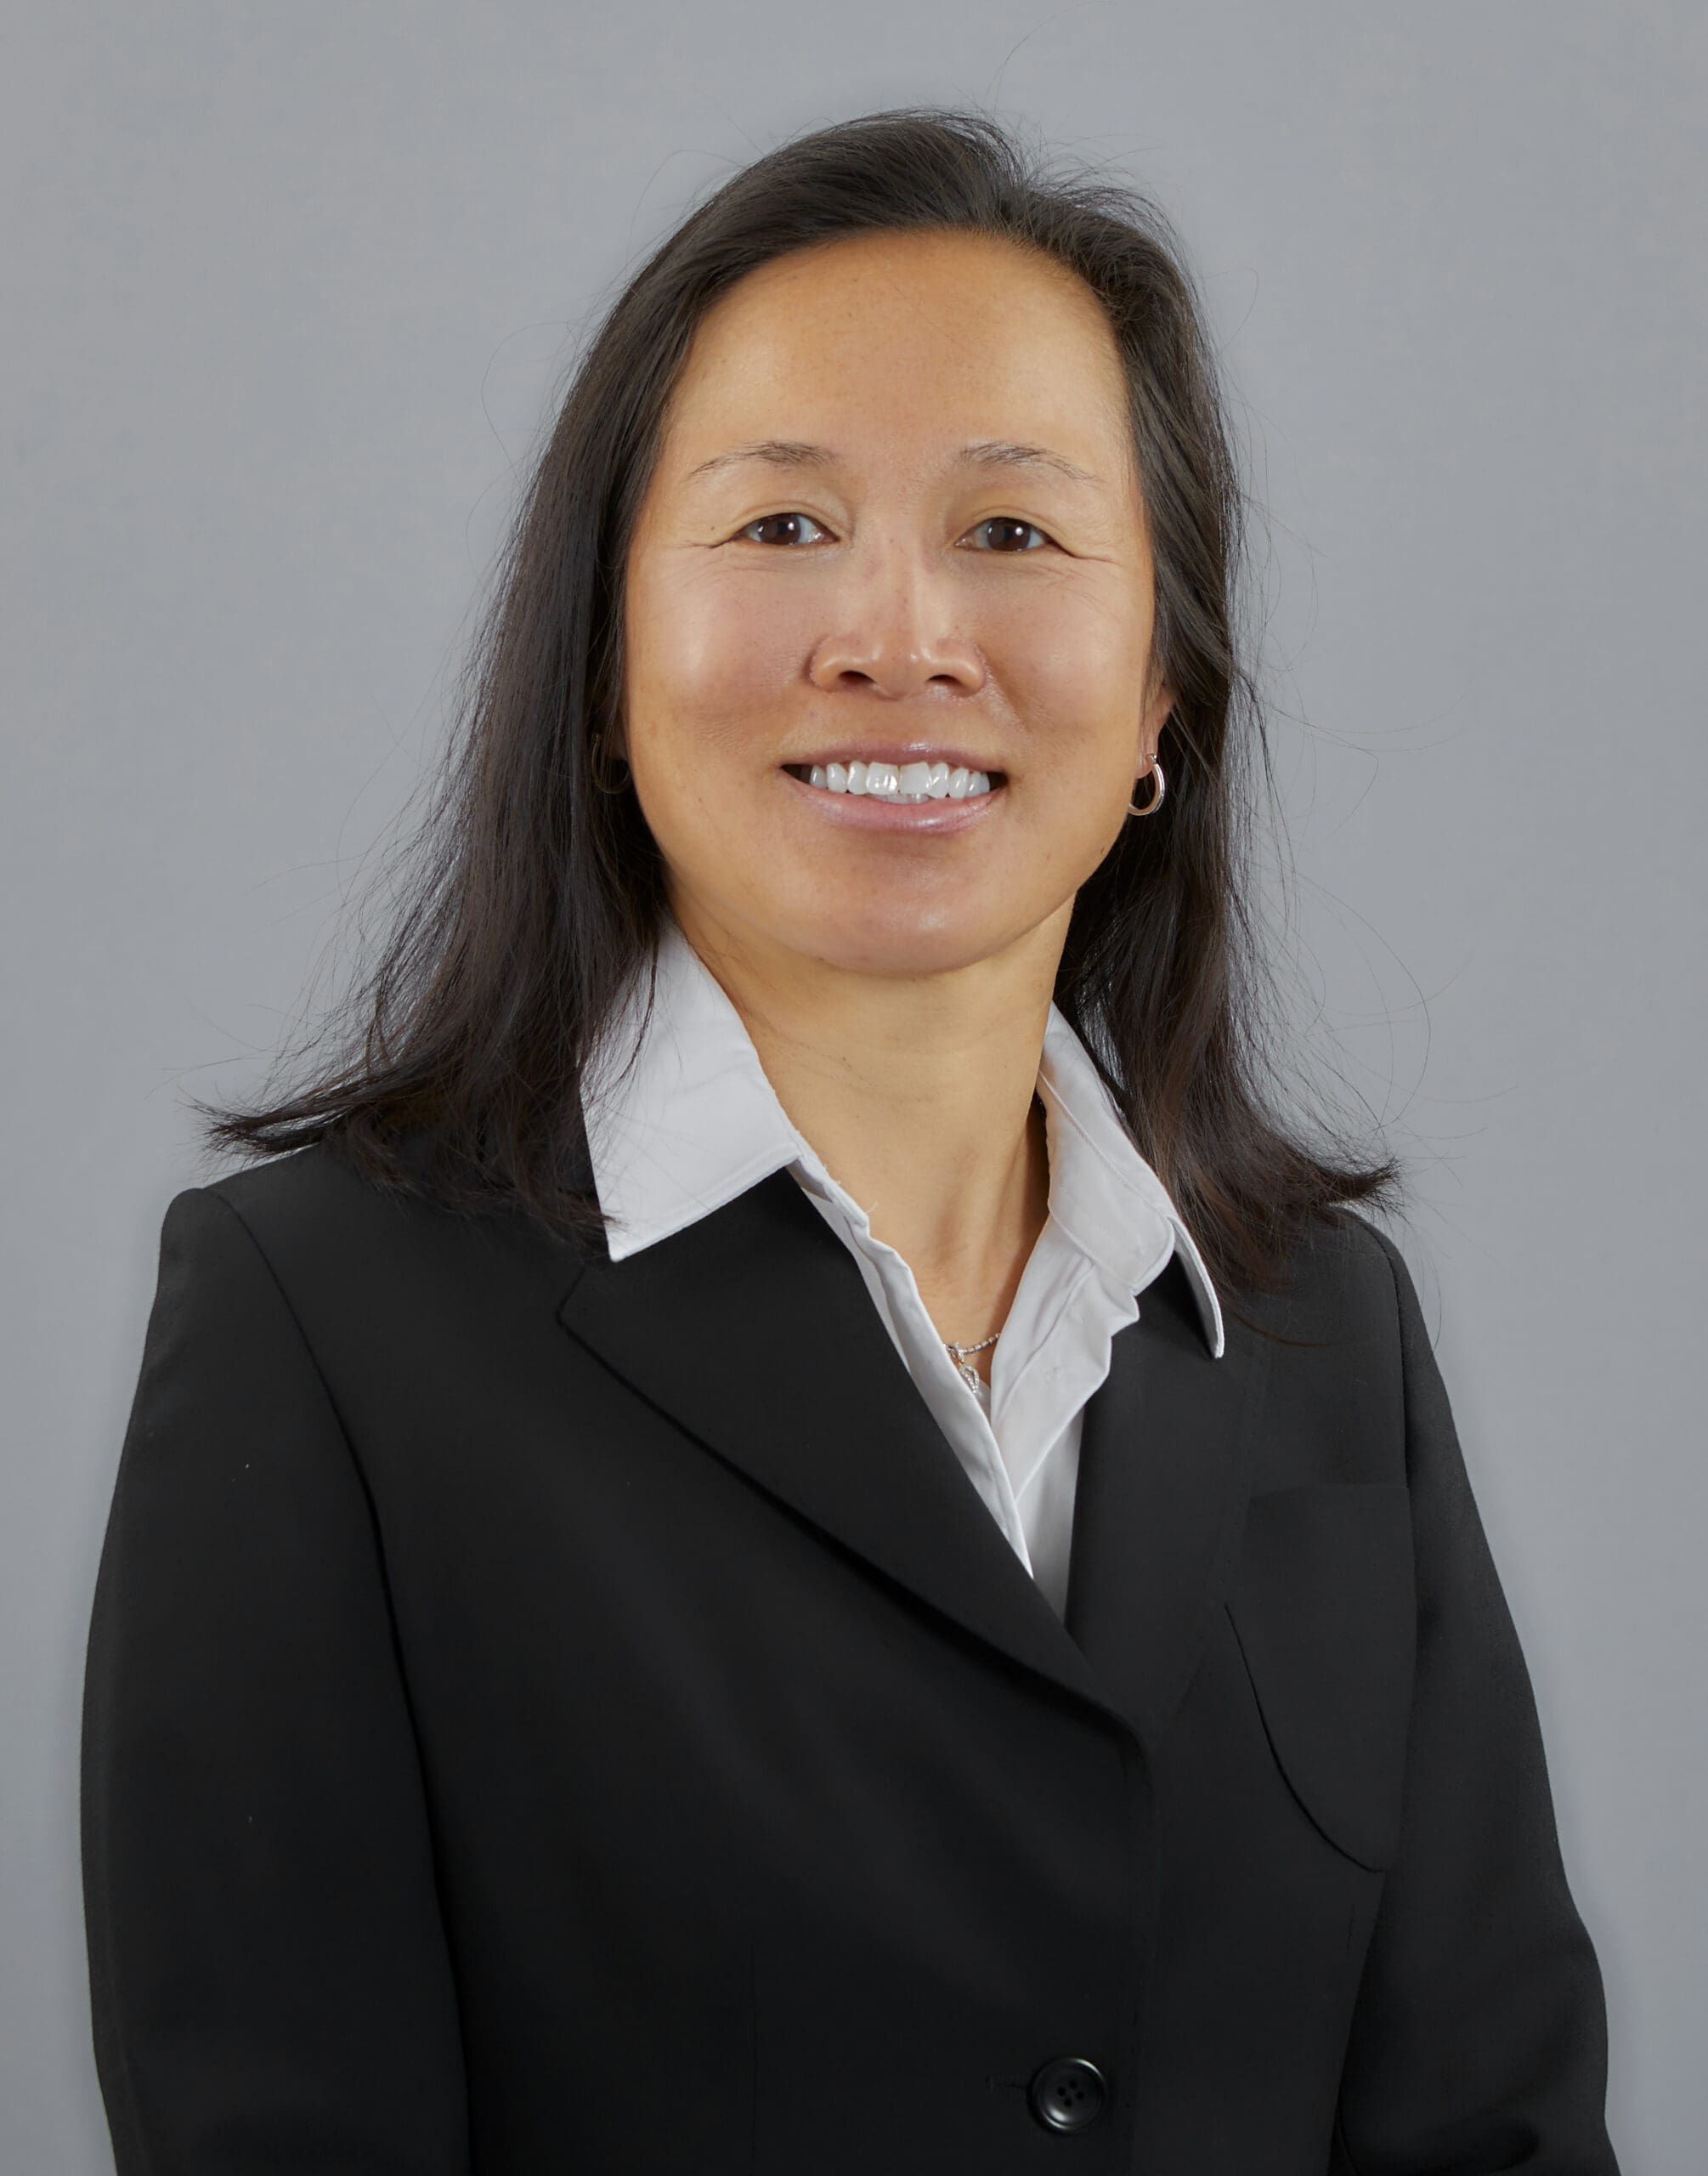 A photo of Dr. Denise Leong-Yokota, a prosthodontist, smiling warmly.